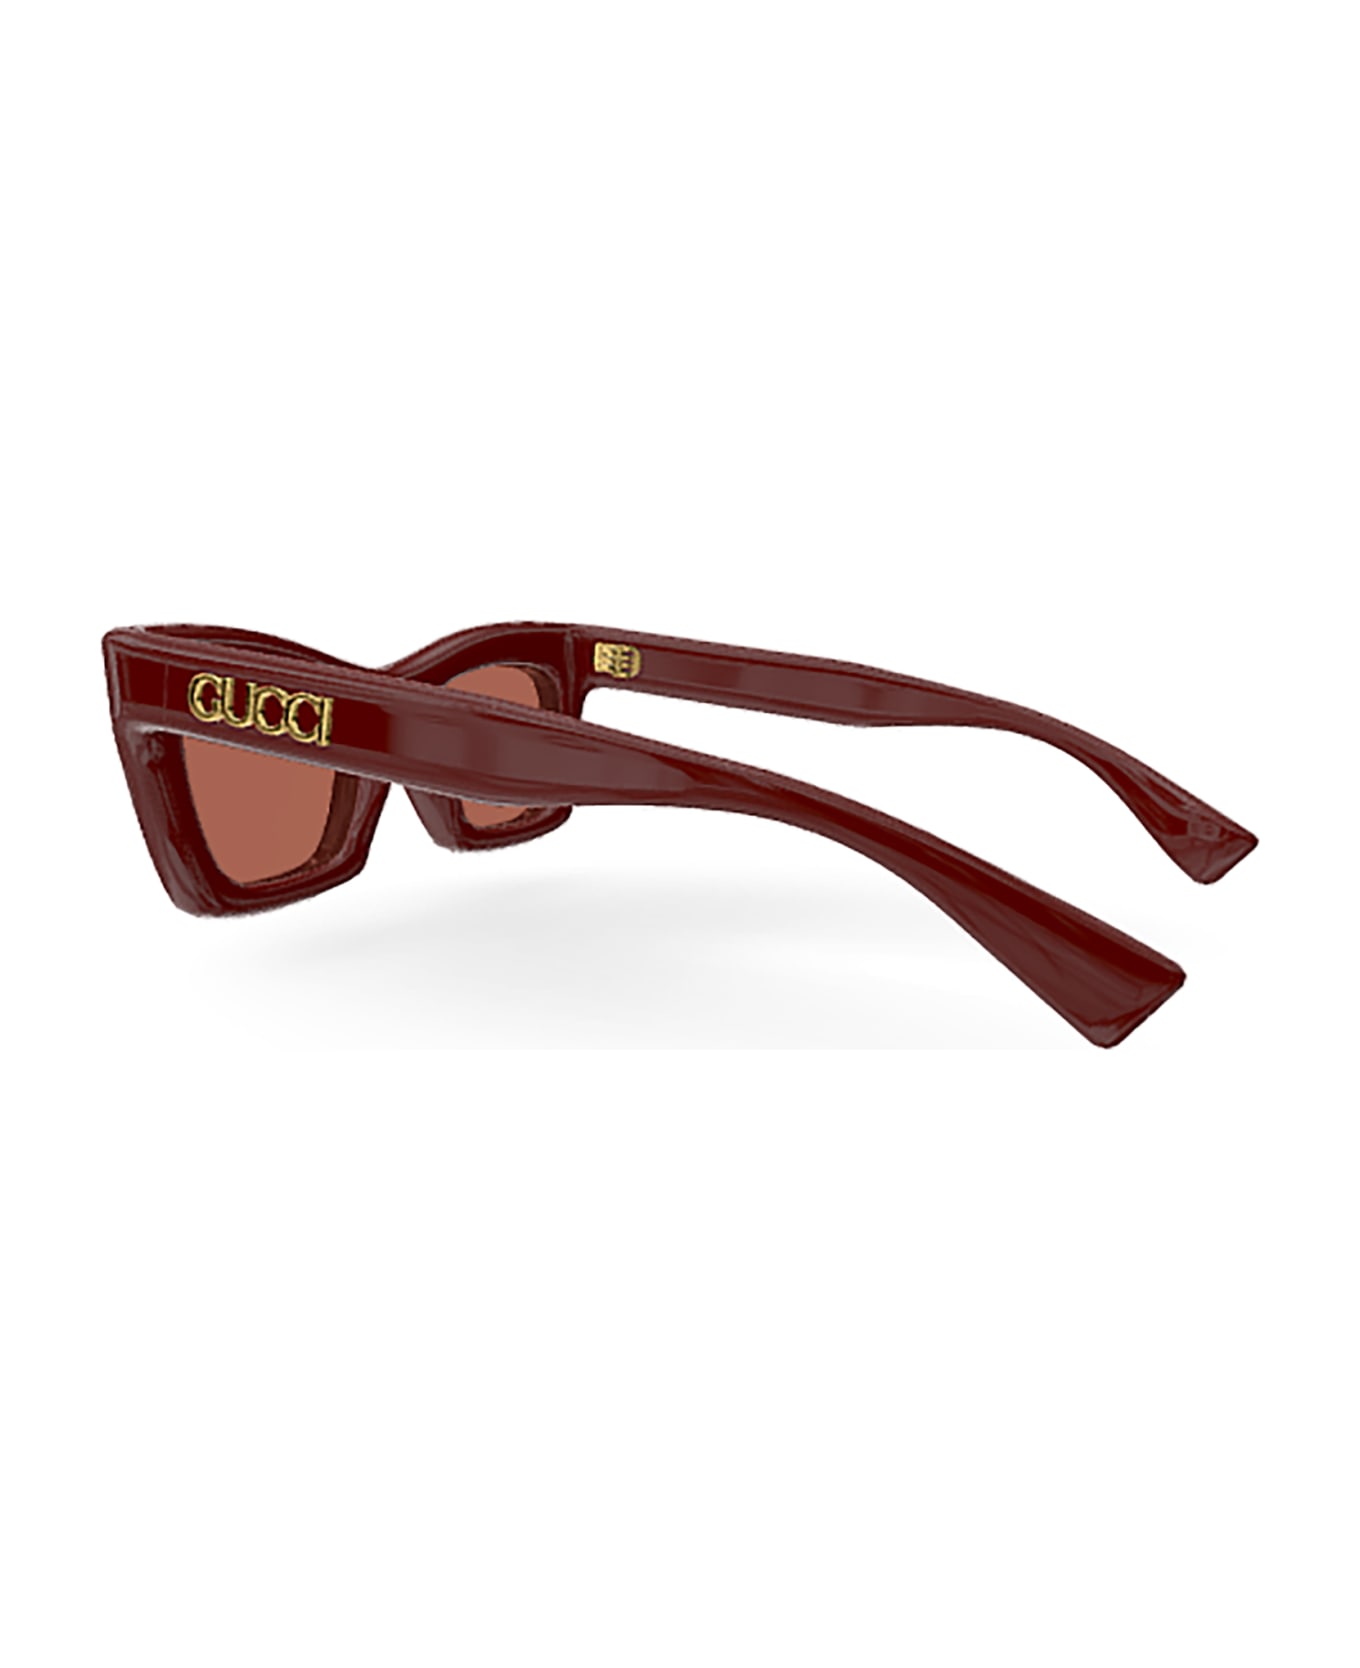 Gucci Eyewear GG1773S Sunglasses - Burgundy Burgundy Bro